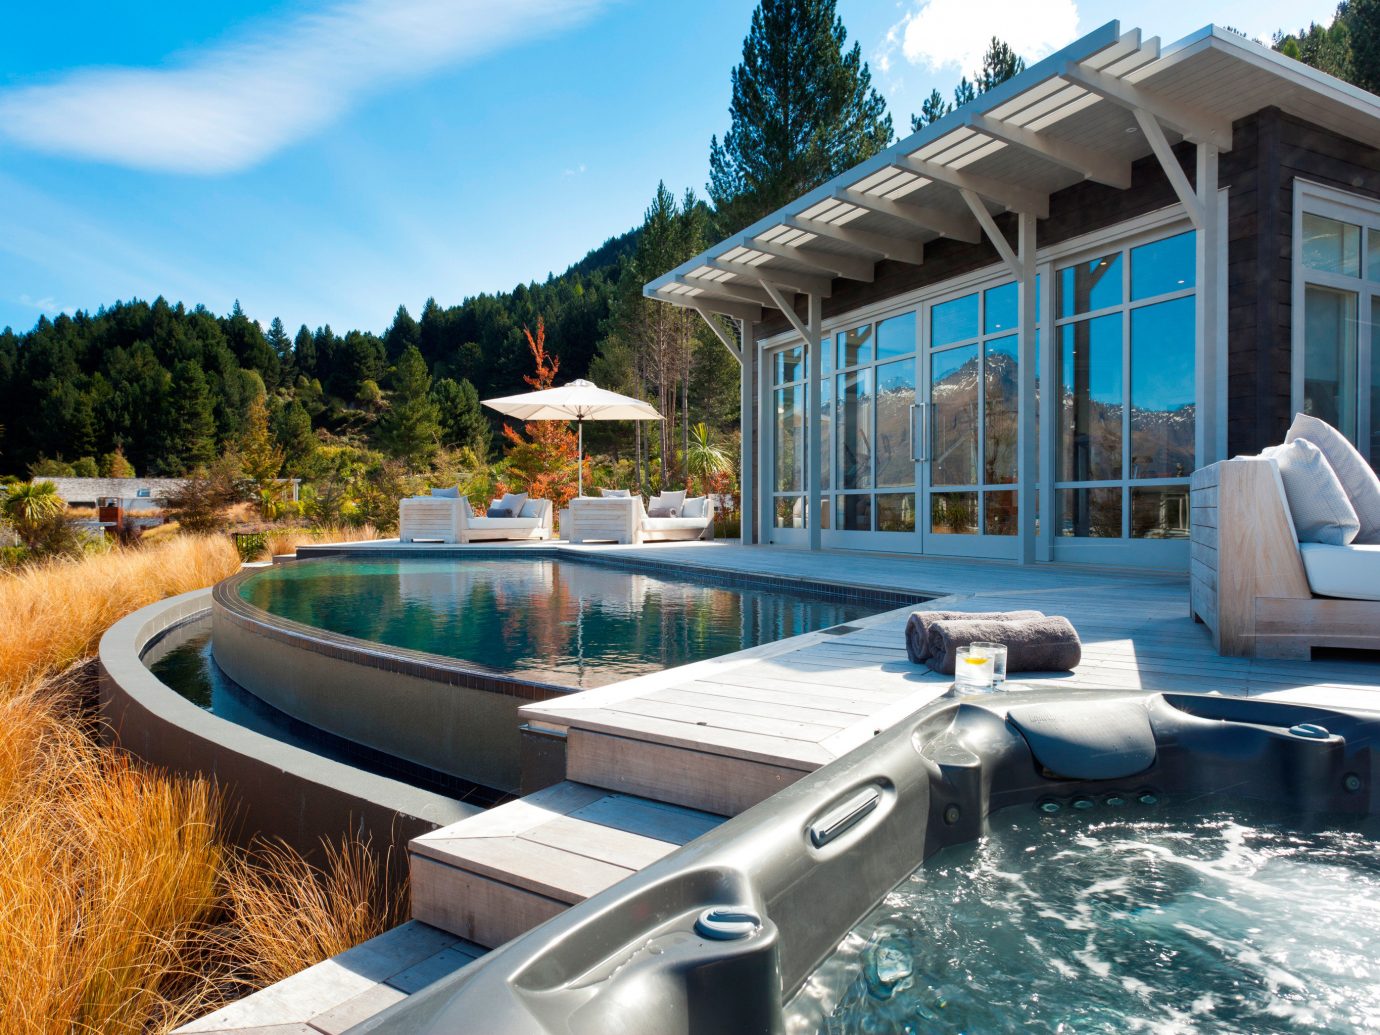 Trip Ideas outdoor sky swimming pool leisure property vacation estate vehicle Resort home Villa real estate backyard Deck